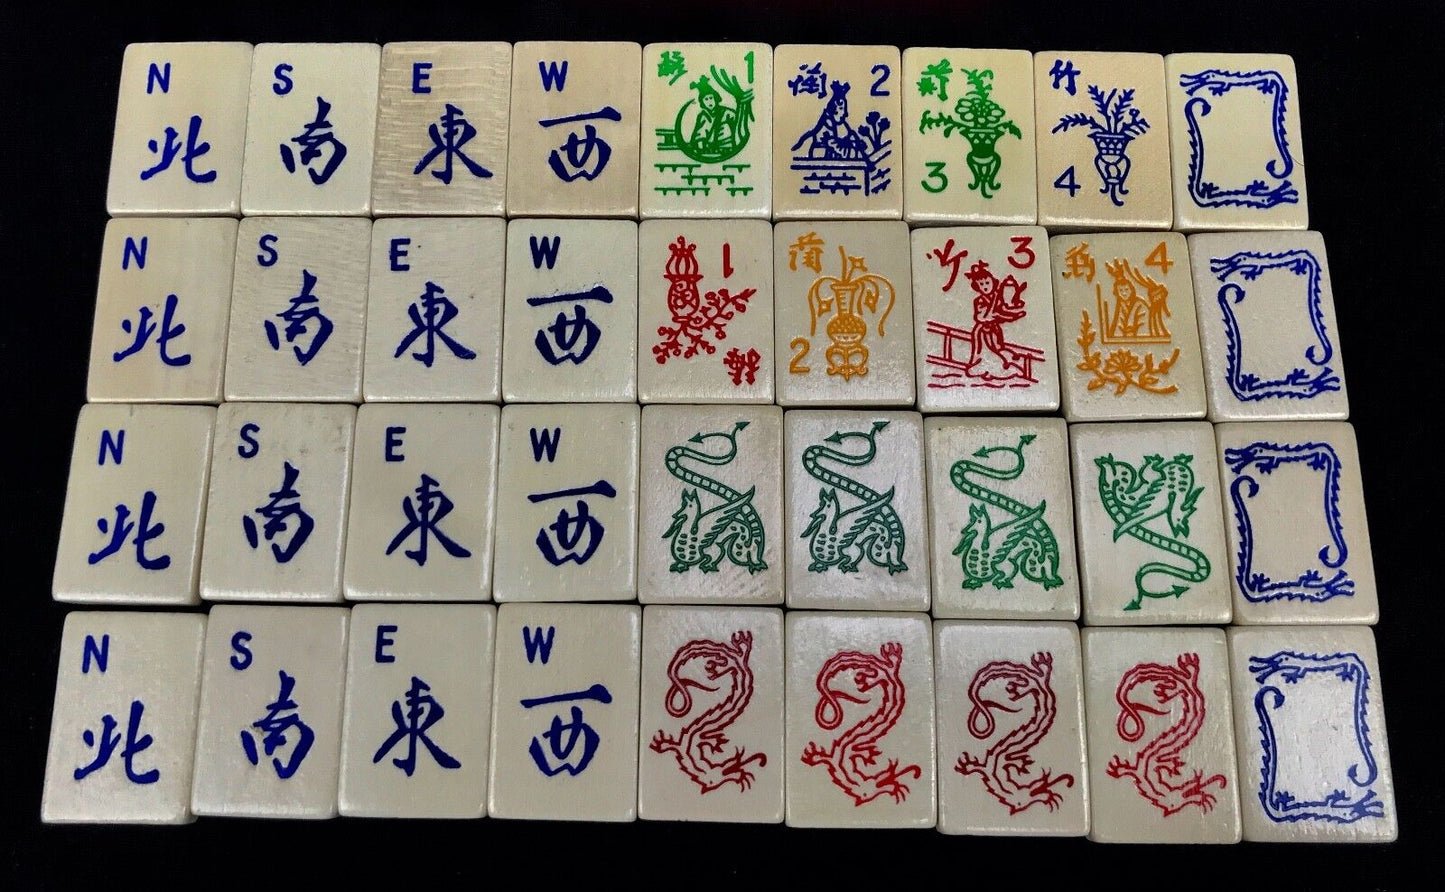 Vintage Wooden Mahjong Set In Original Box / Mah Jong Game / 20th Century